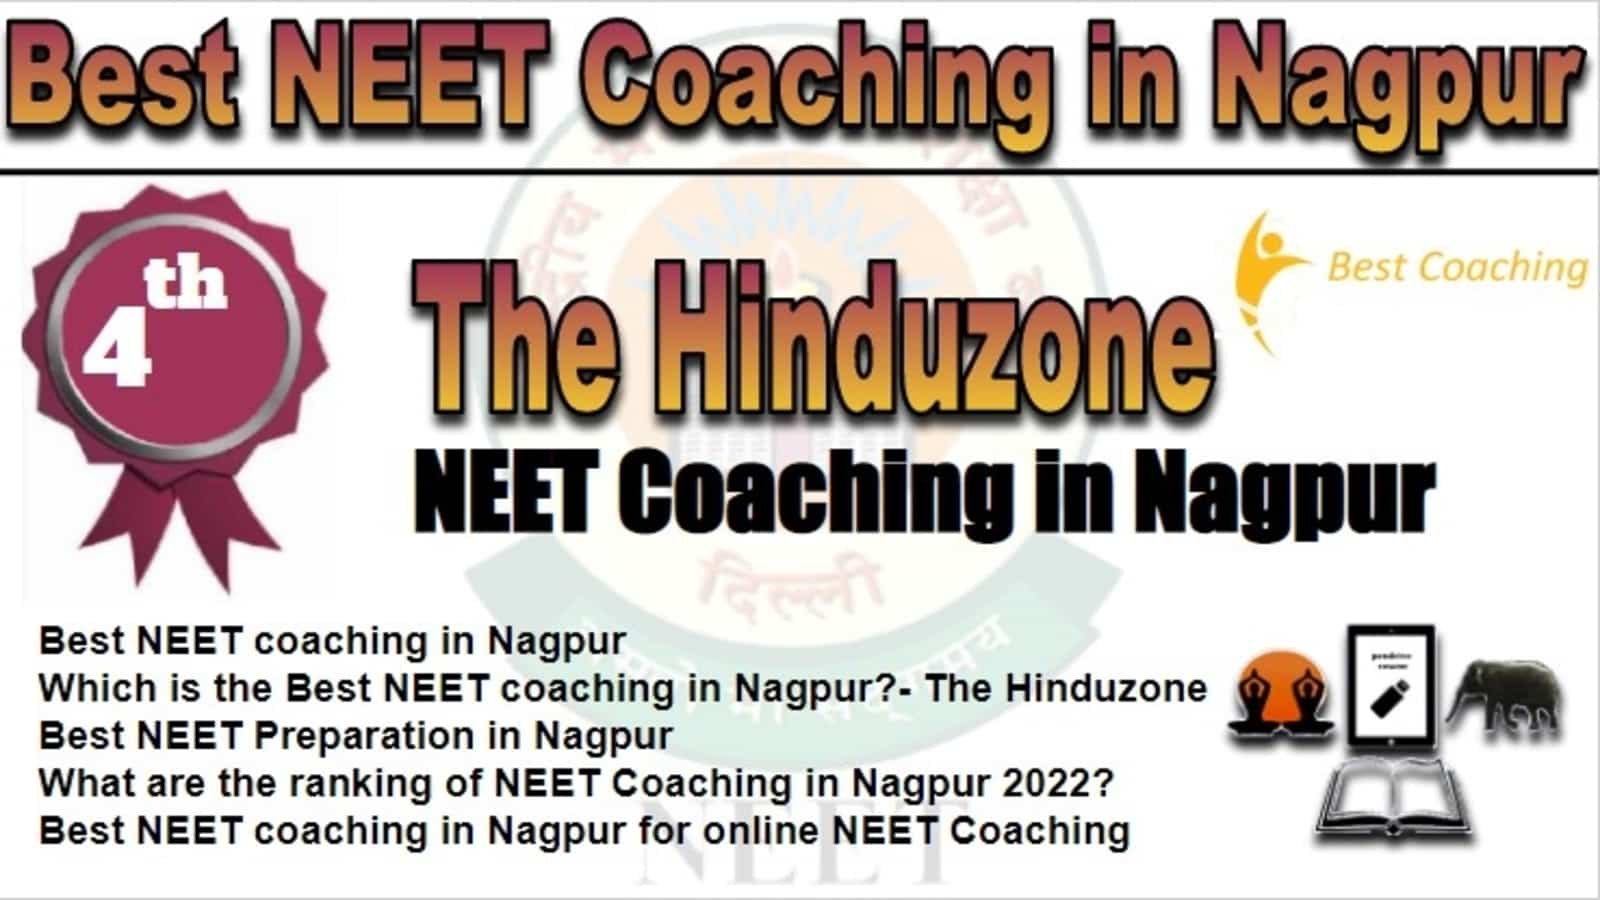 Rank 4 Best NEET Coaching in Nagpur